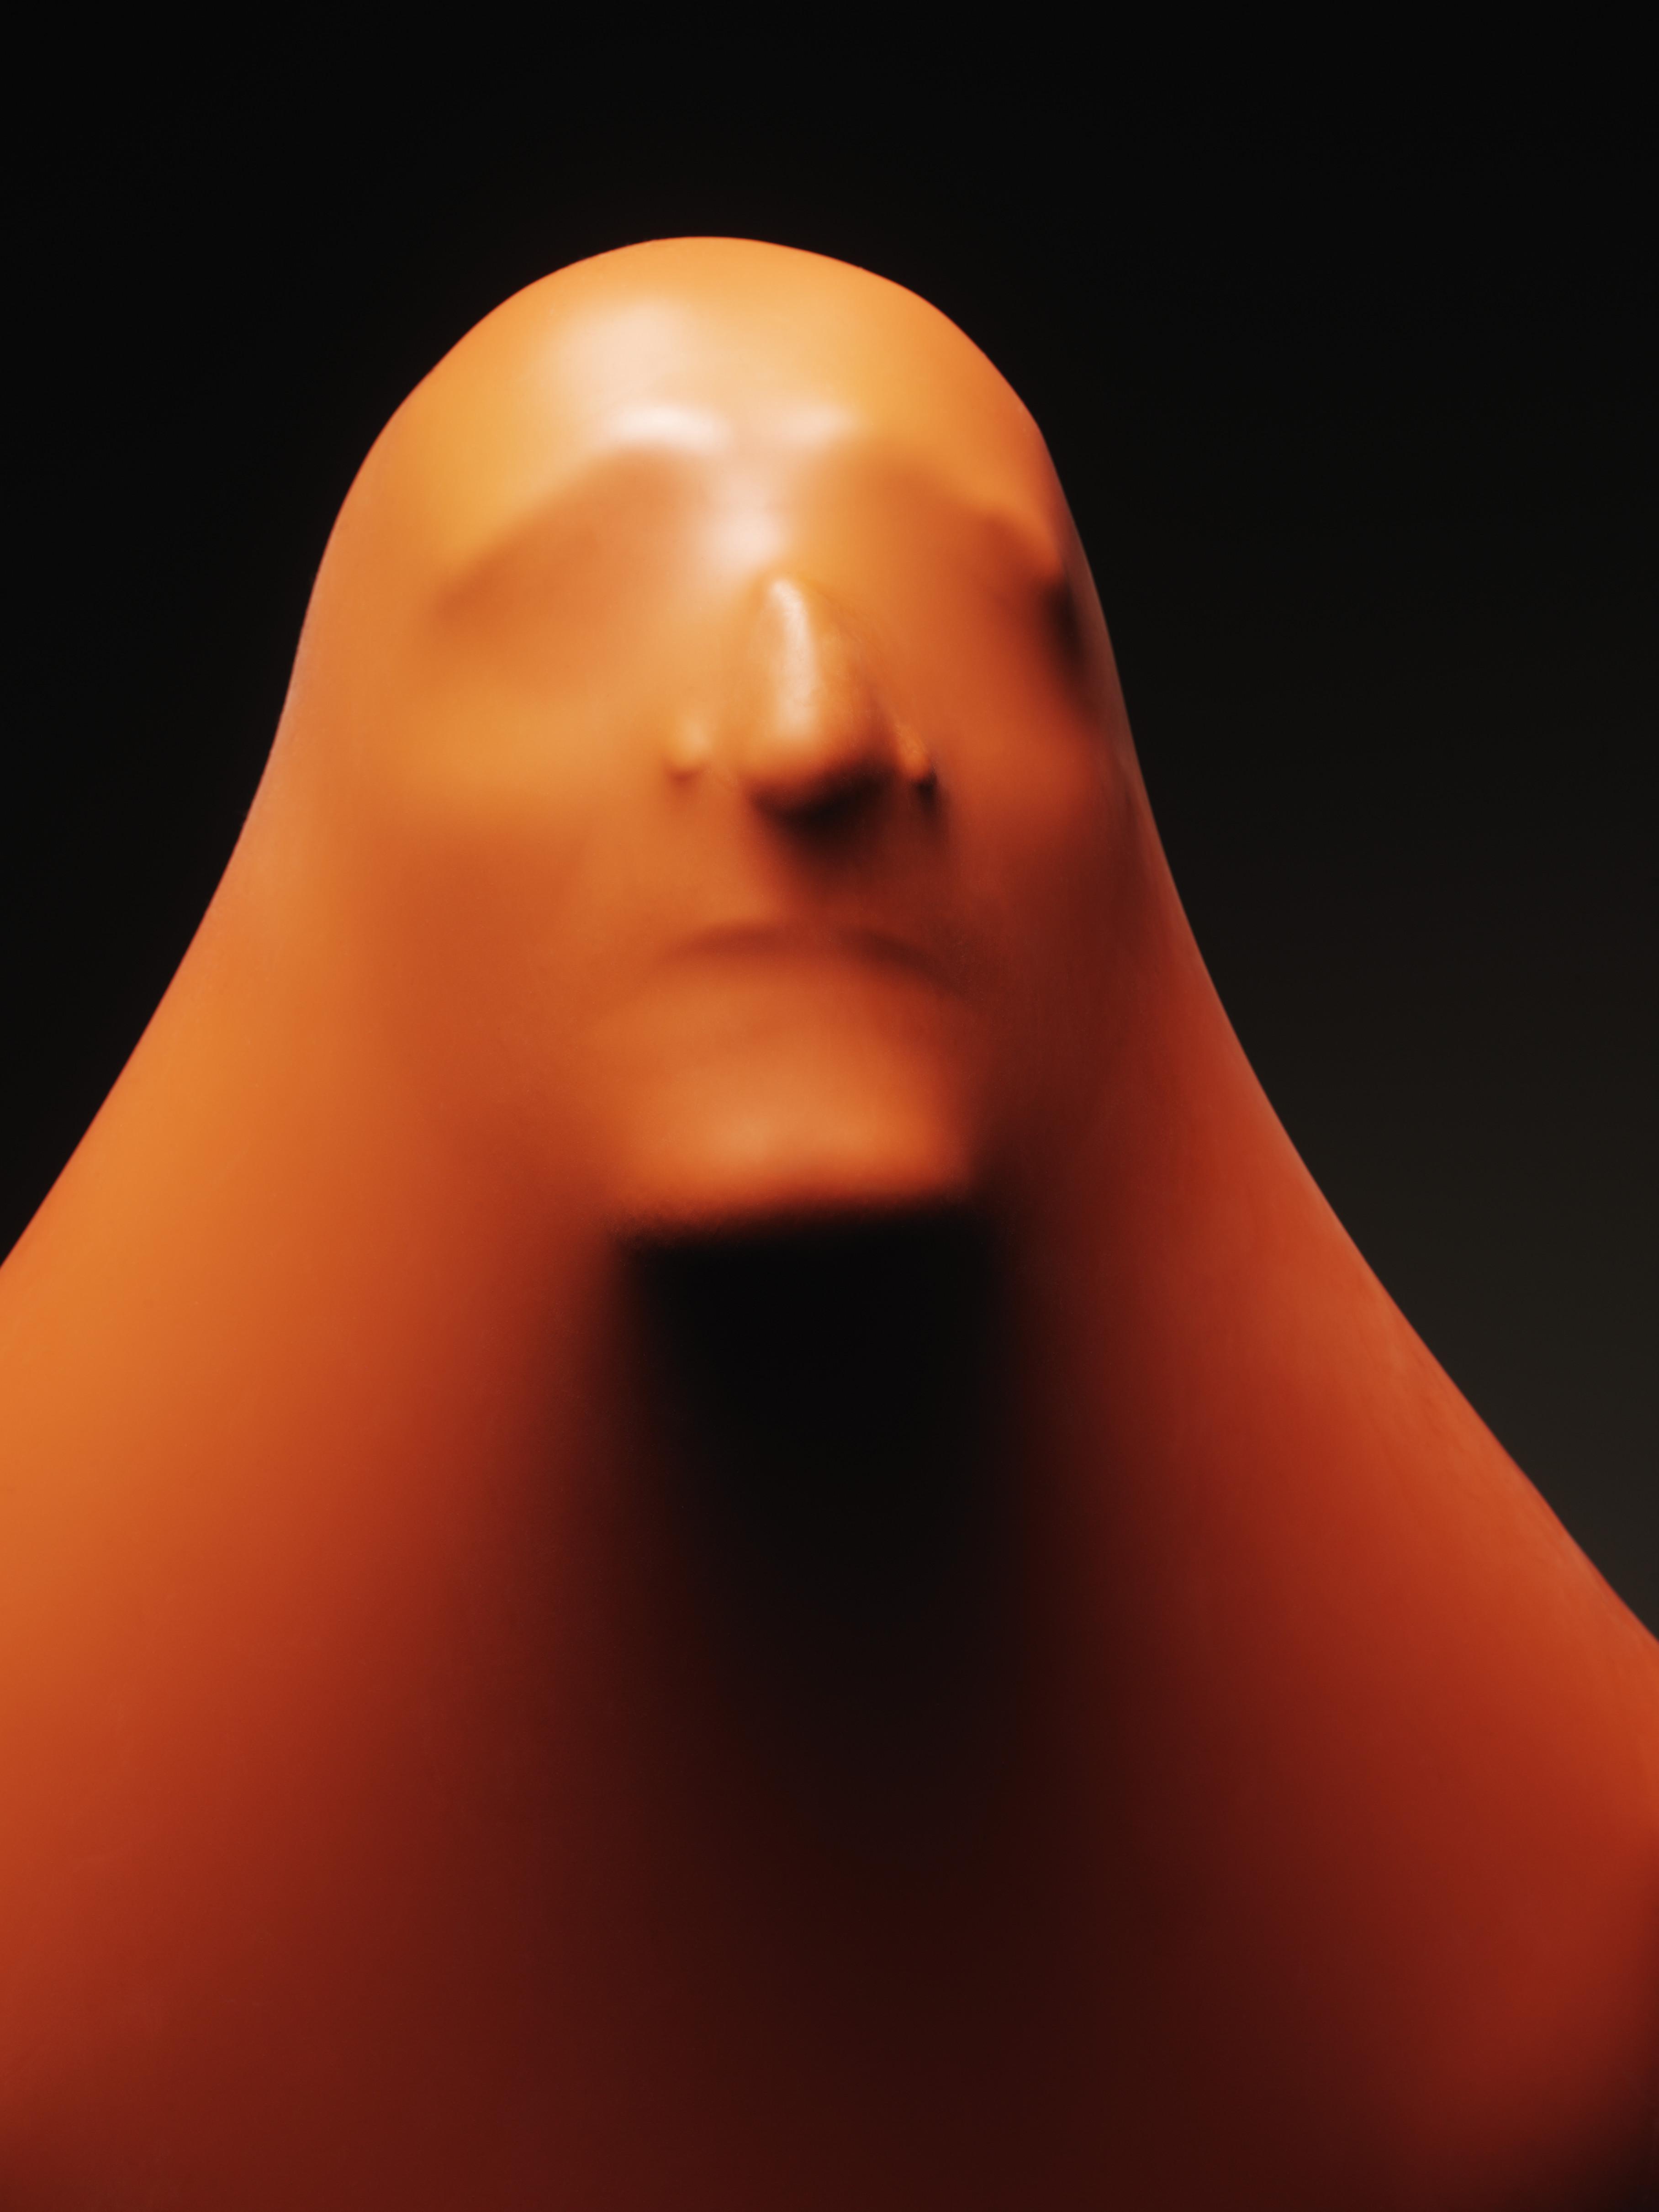 Impression of man's face through orange rubber, close-up